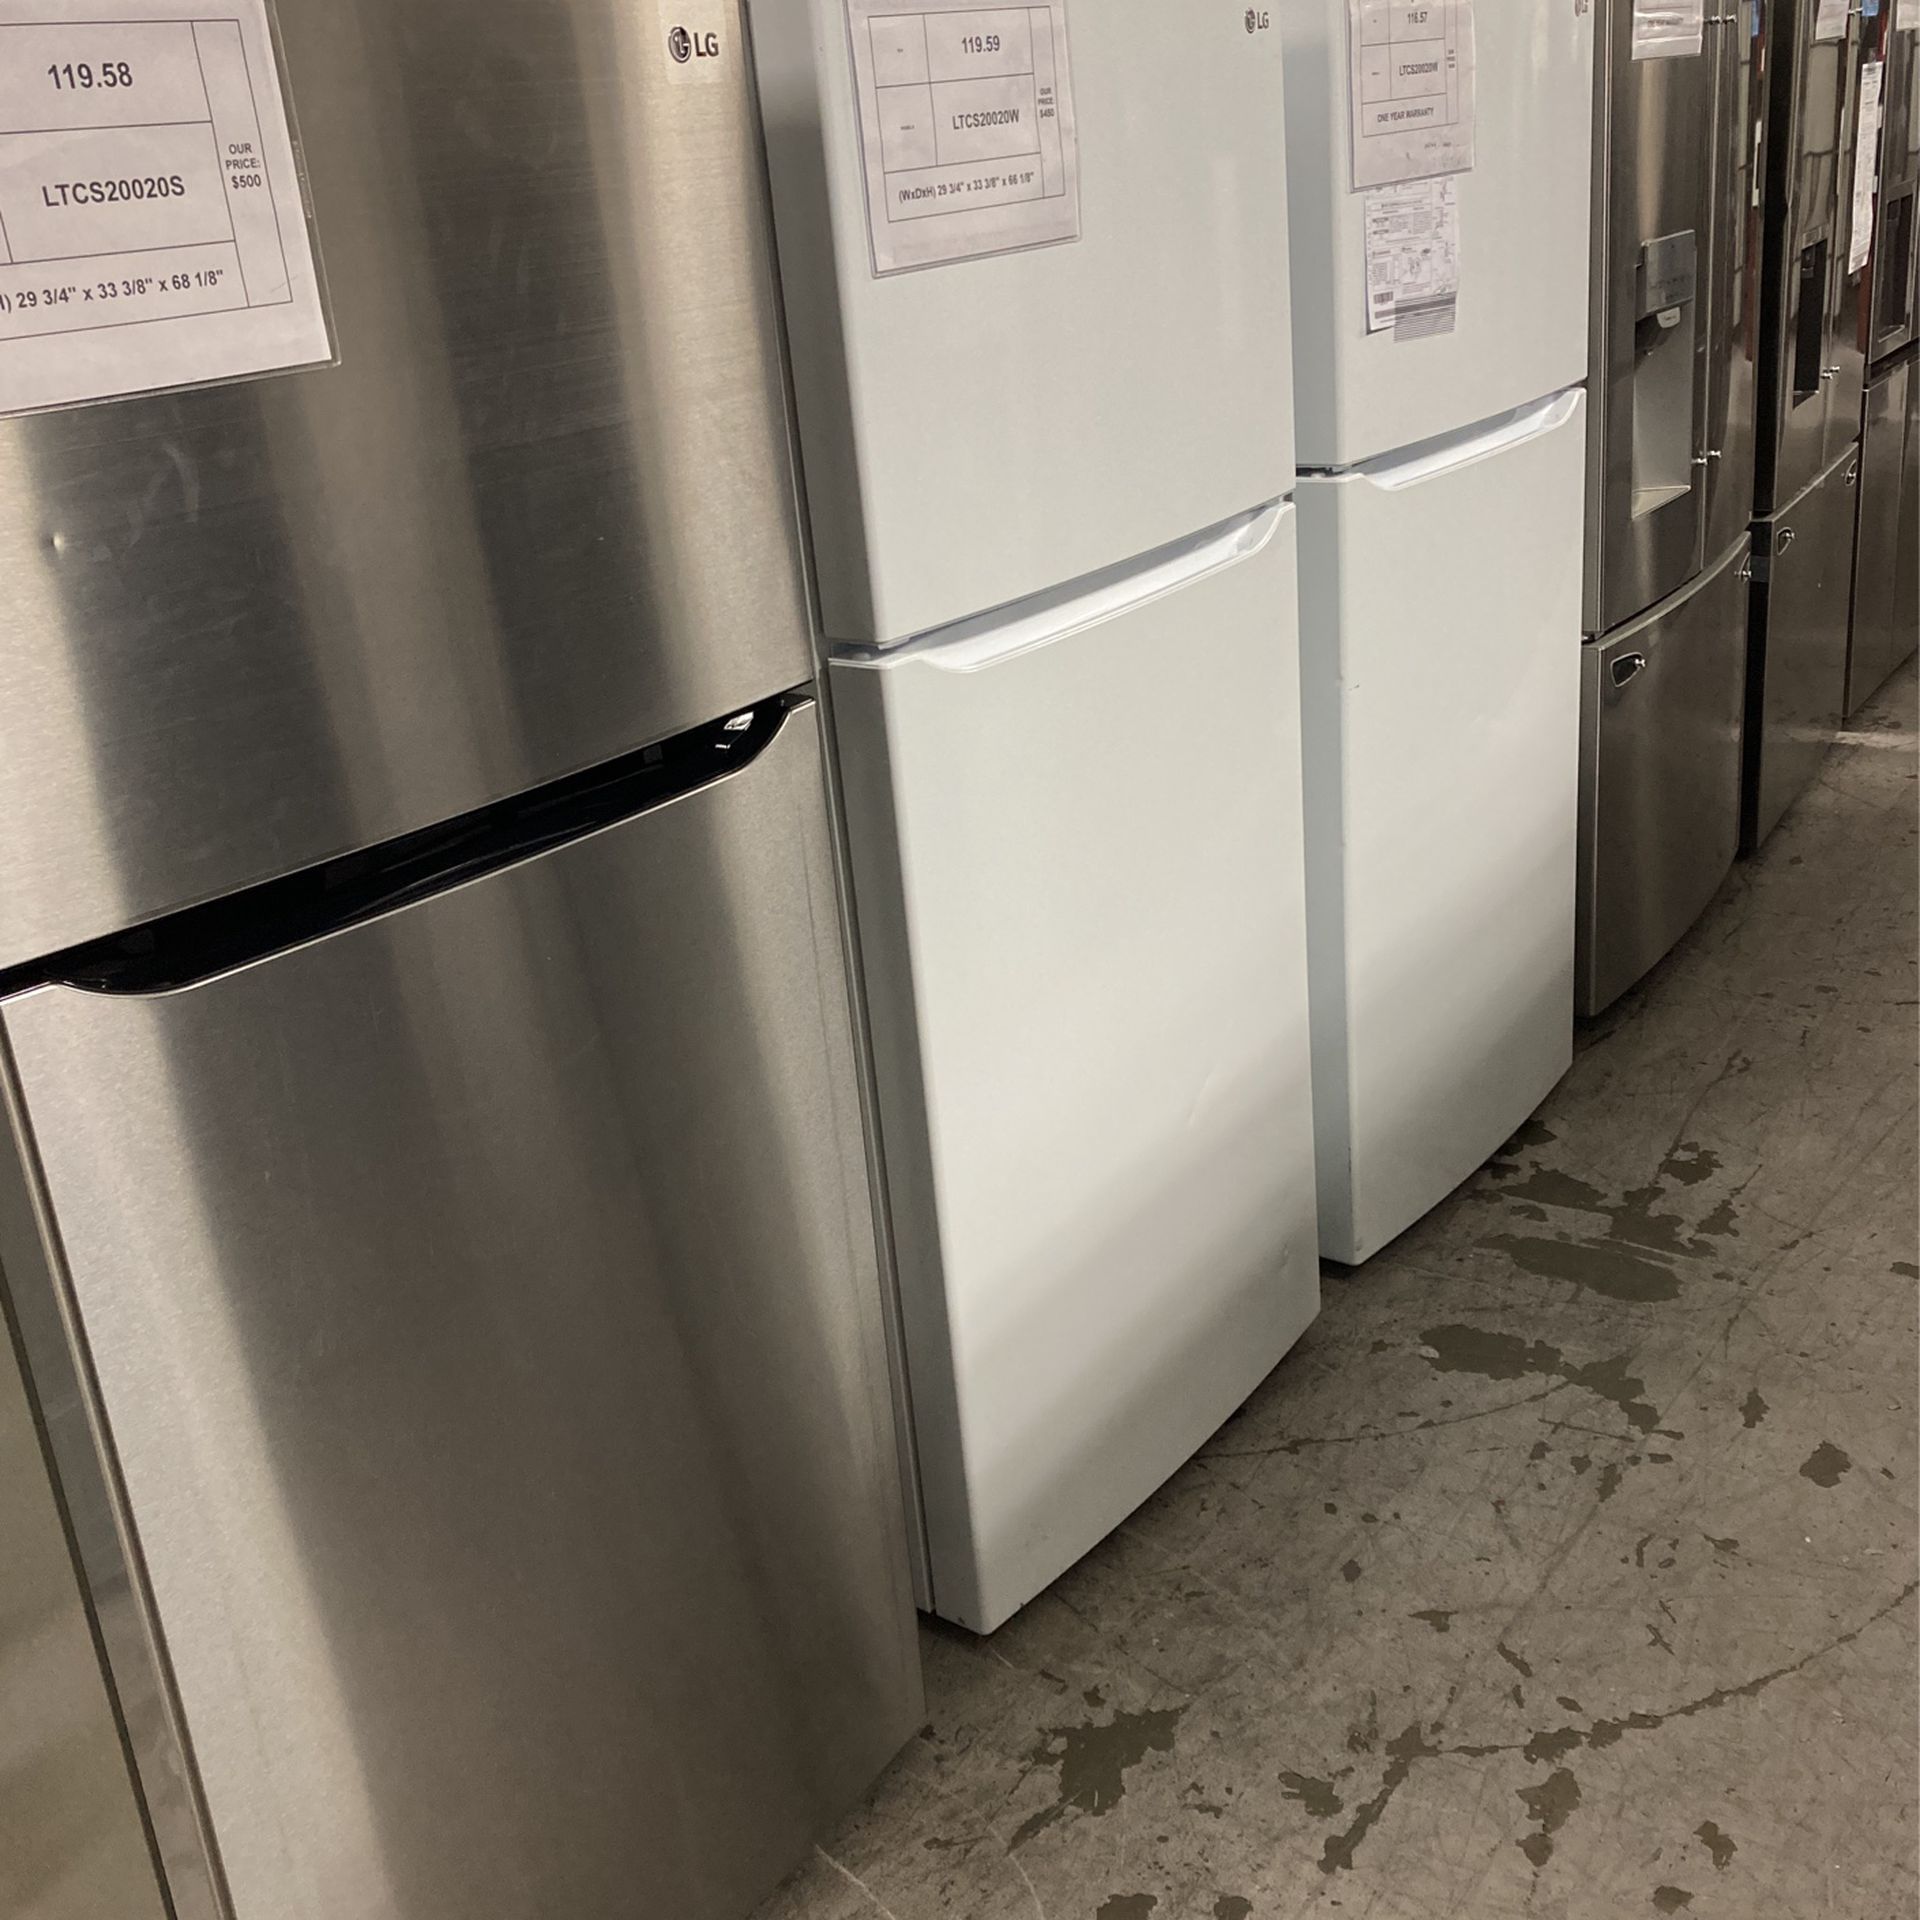 LG 30” W 20 cu. ft. Top Freezer Refrigerator w/ Multi-Air Flow and Reversible Door in White, ENERGY STAR